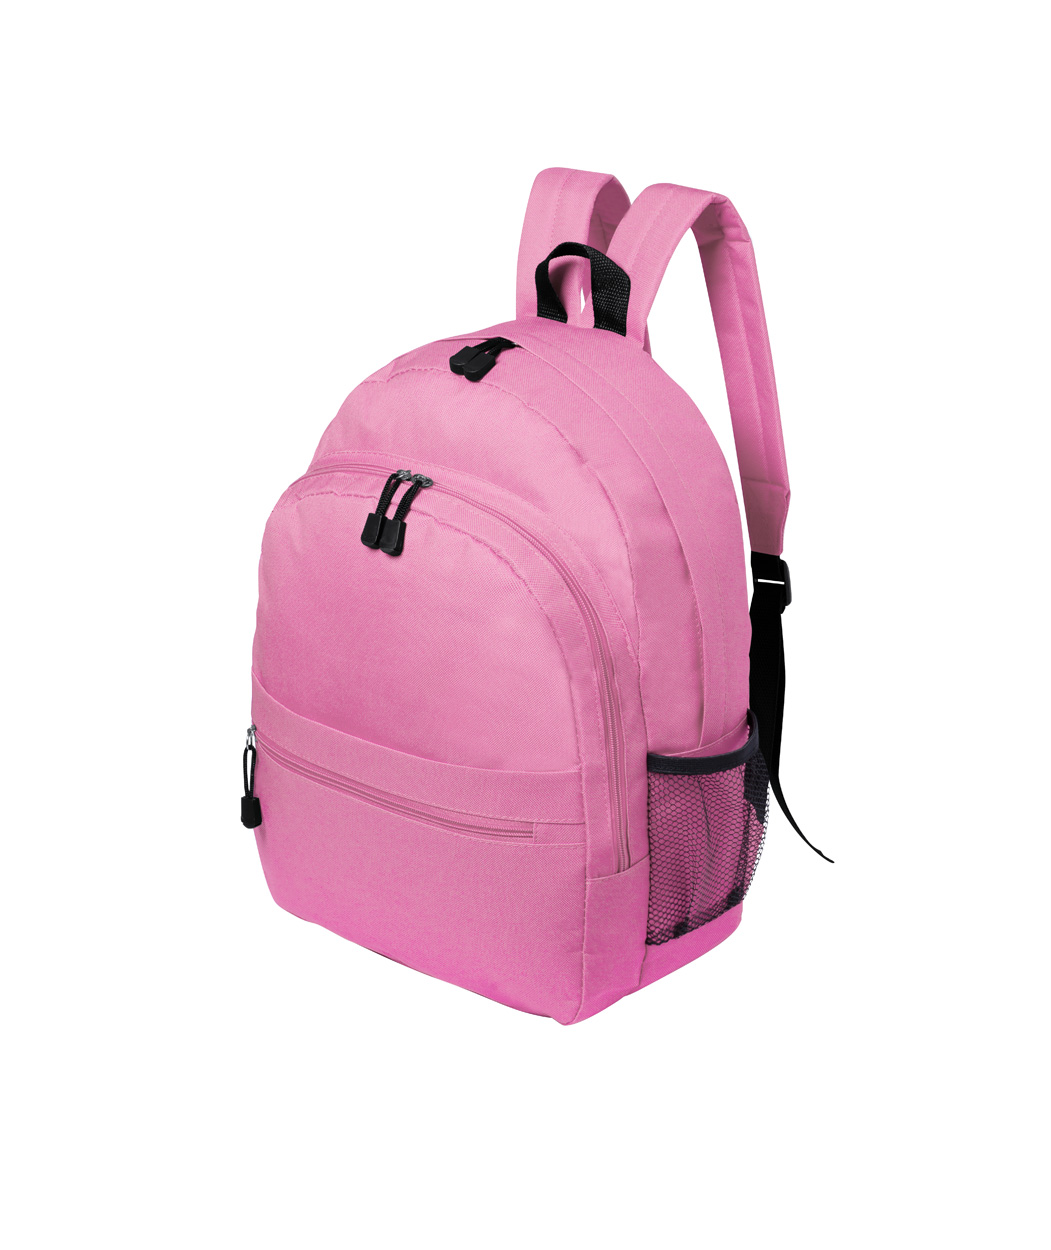 Ventix backpack - pink